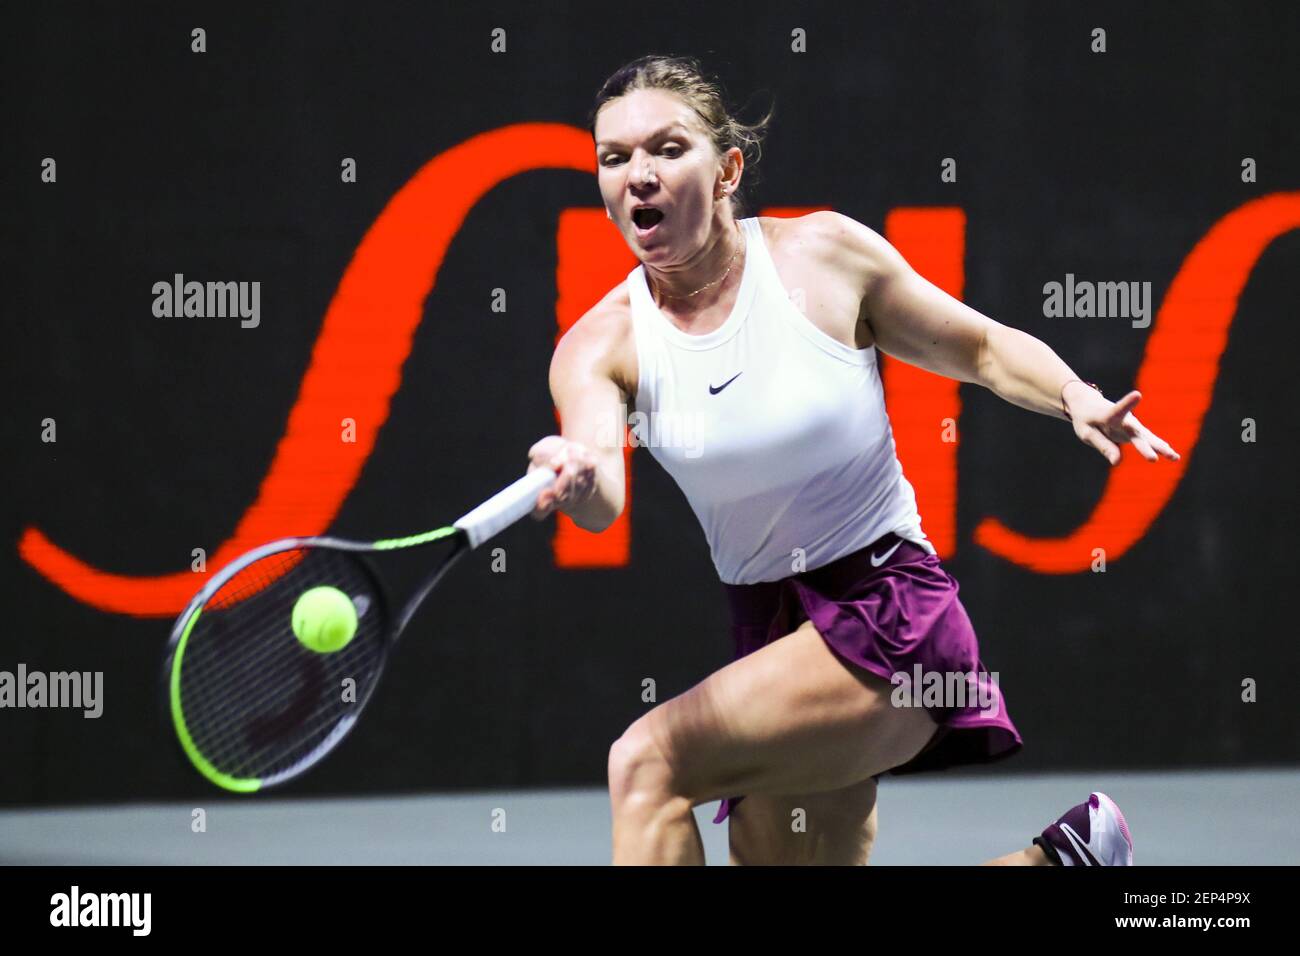 Romanian professional tennis player Simona Halep competes against Canadian  professional tennis player Bianca Andreescu during a